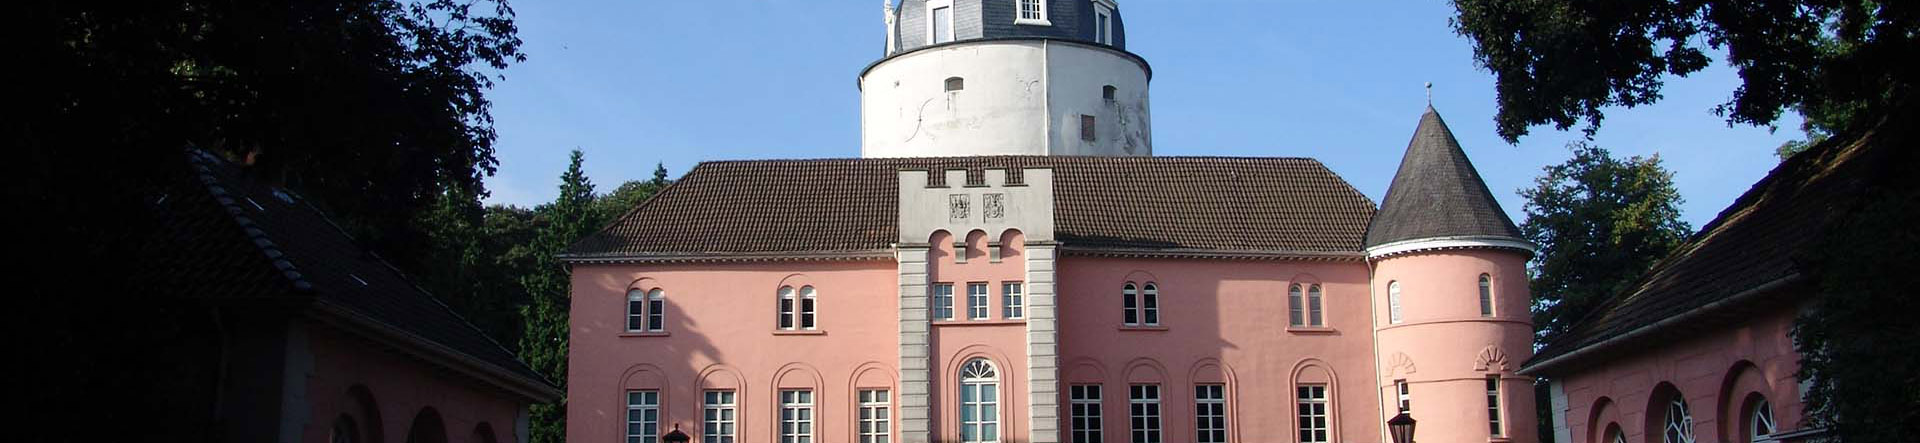 Schloss in Jever